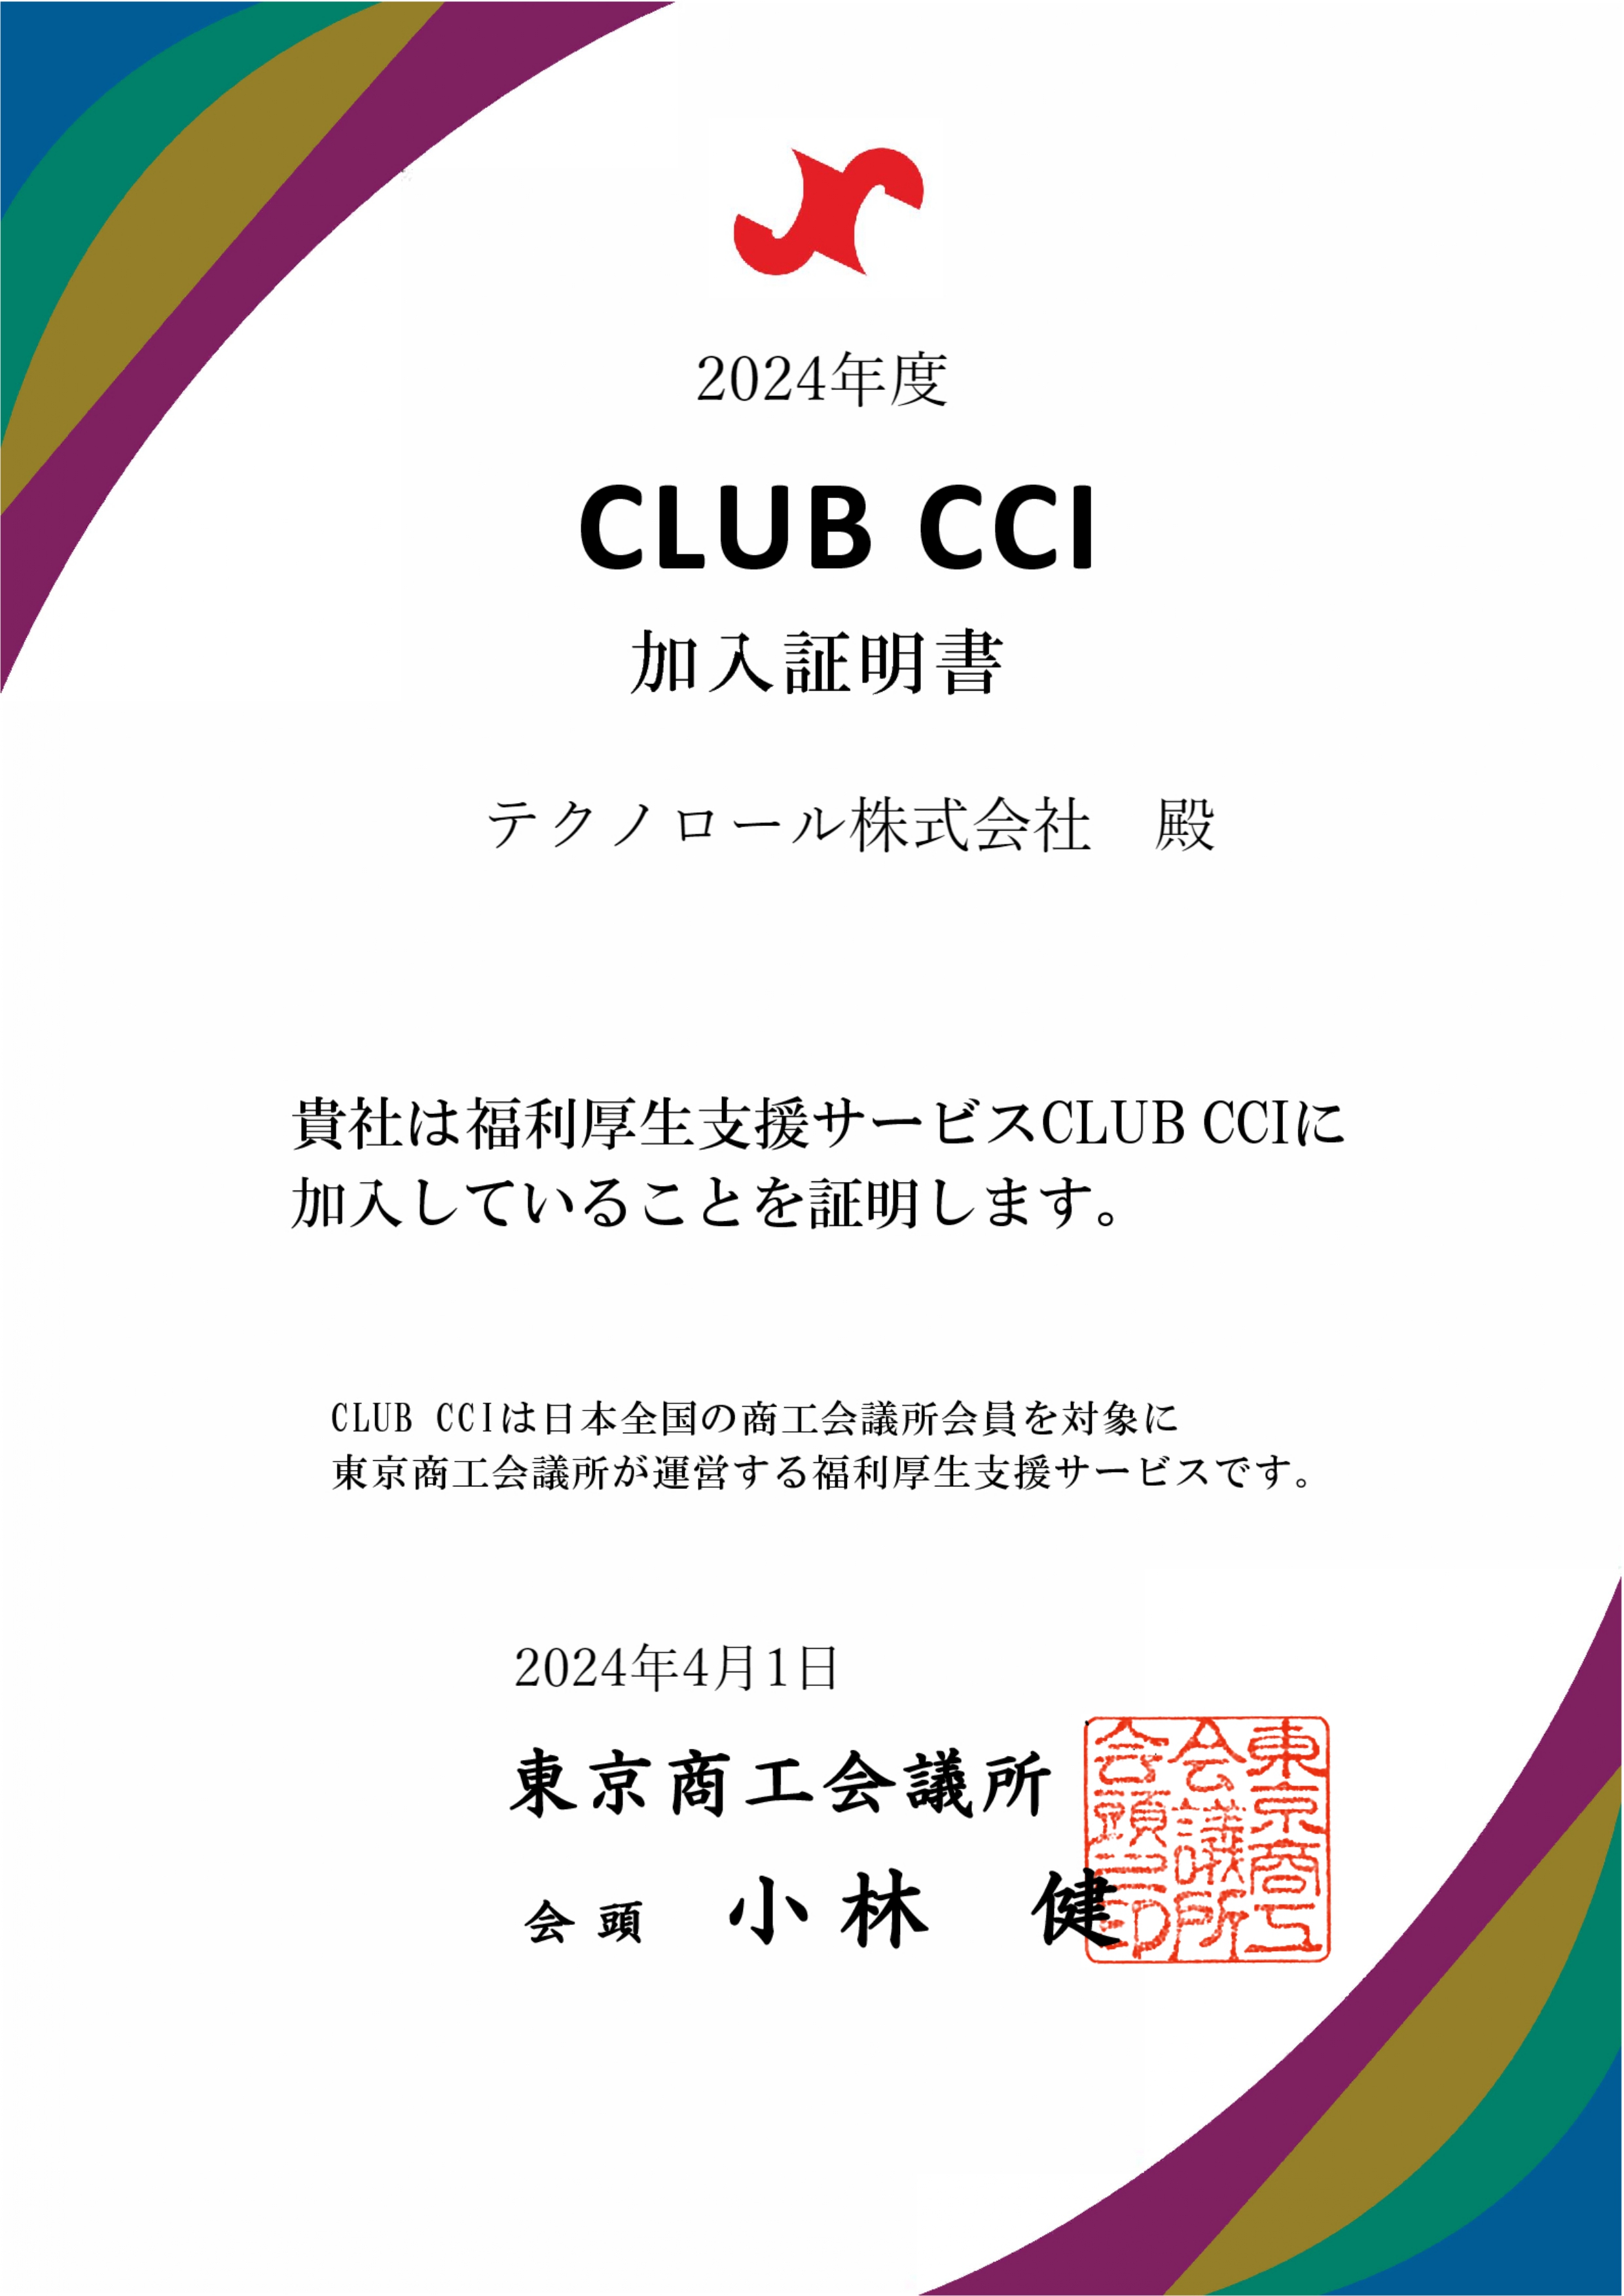 CLUB CCI加入証明書_テクノロール株式会社